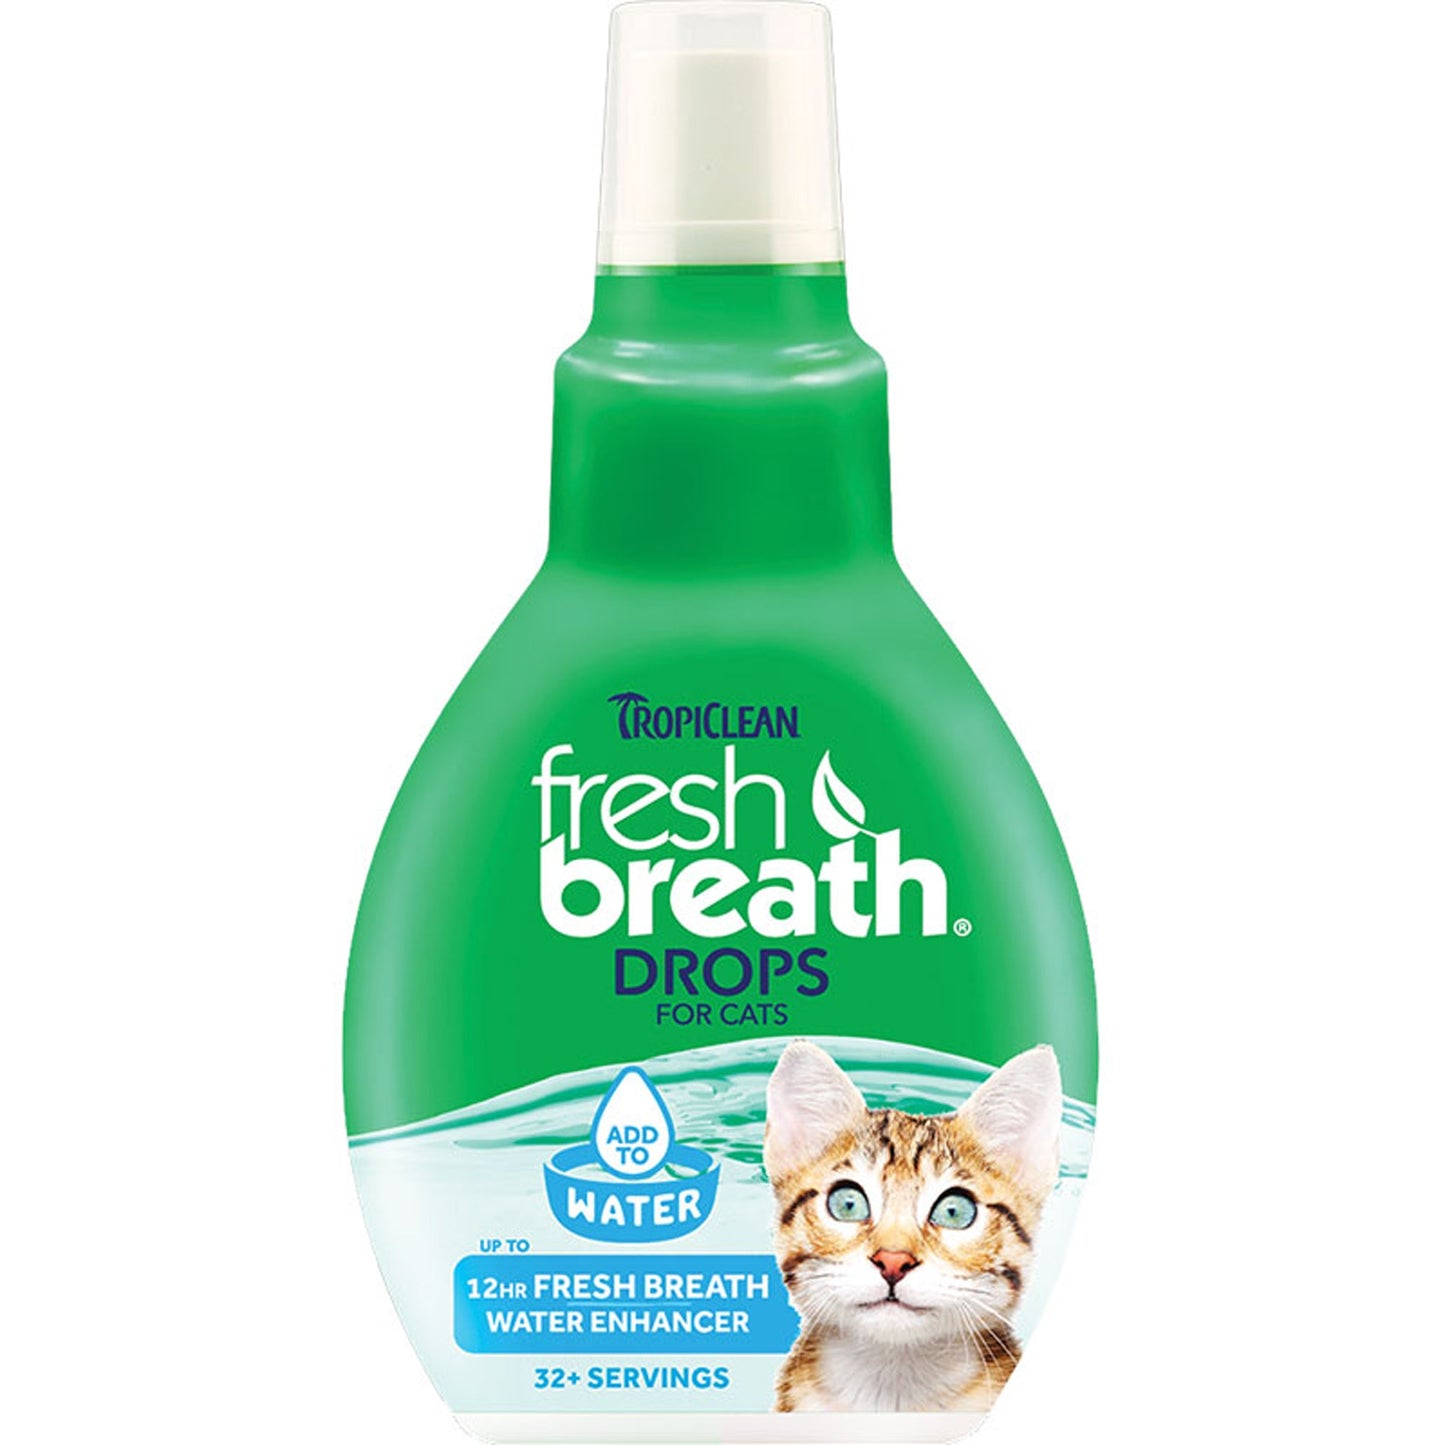 TropiClean Fresh Breath Drops for Cats 6pc Display 1ea/2.2 Fl. oz, 6 Piece